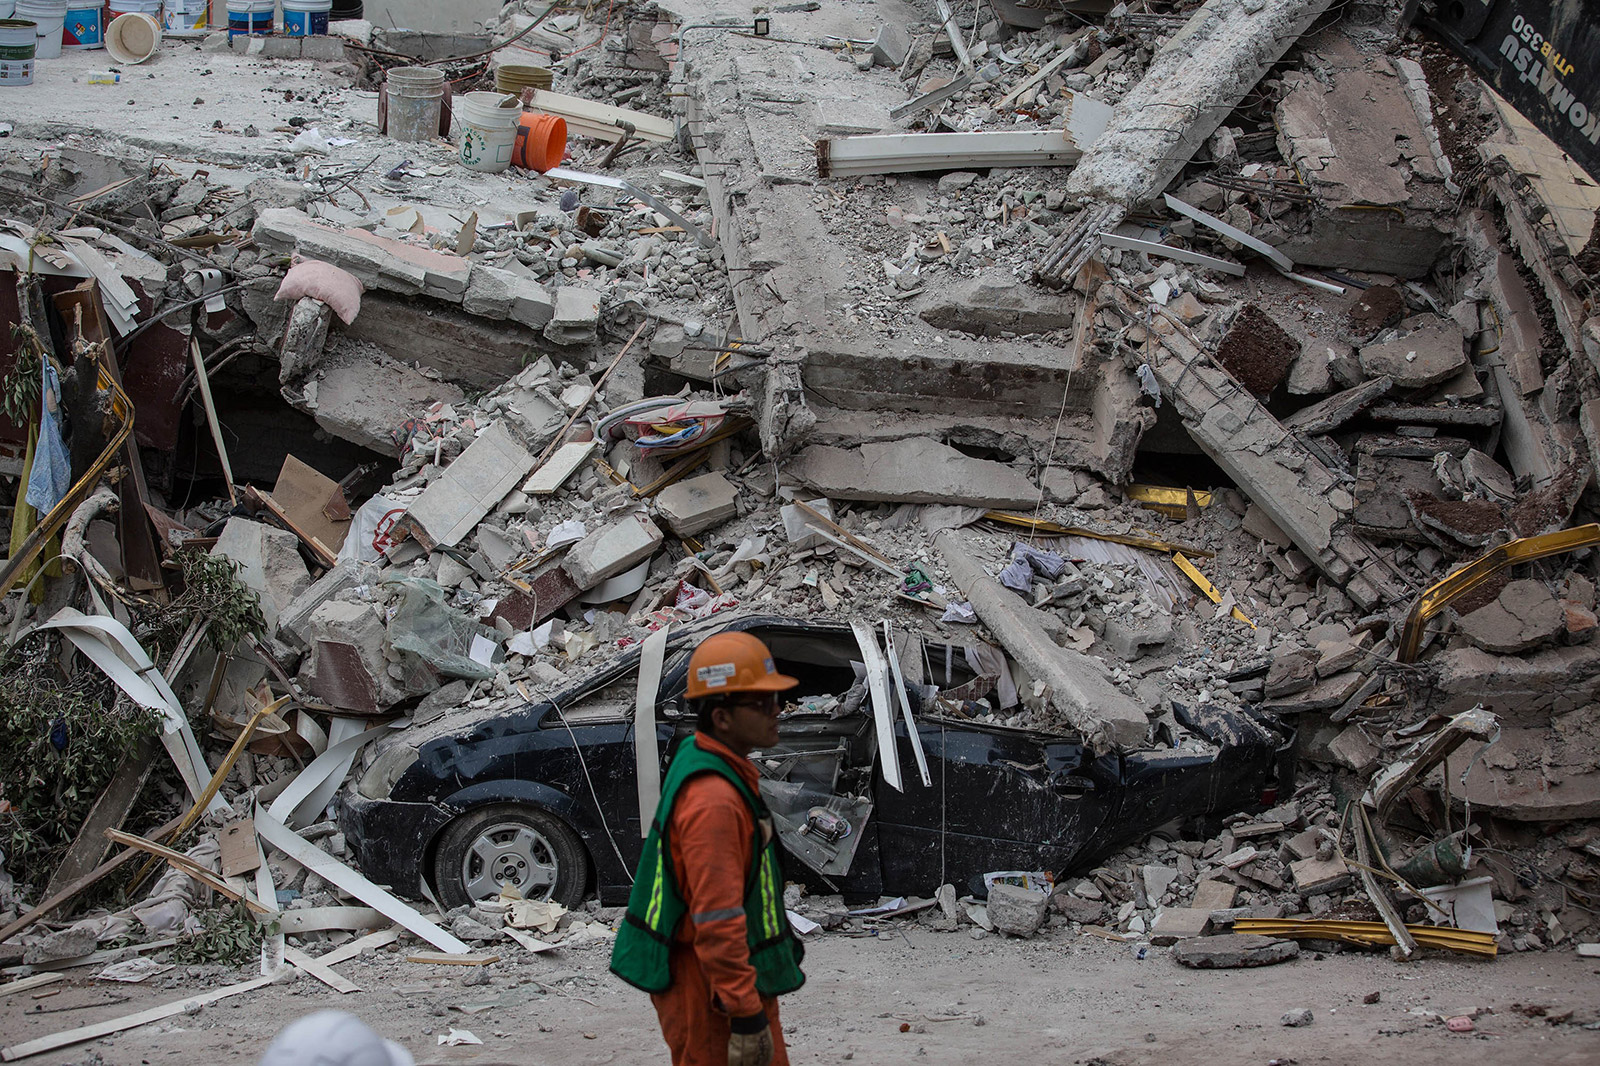 Photos show quake's destruction in Mexico